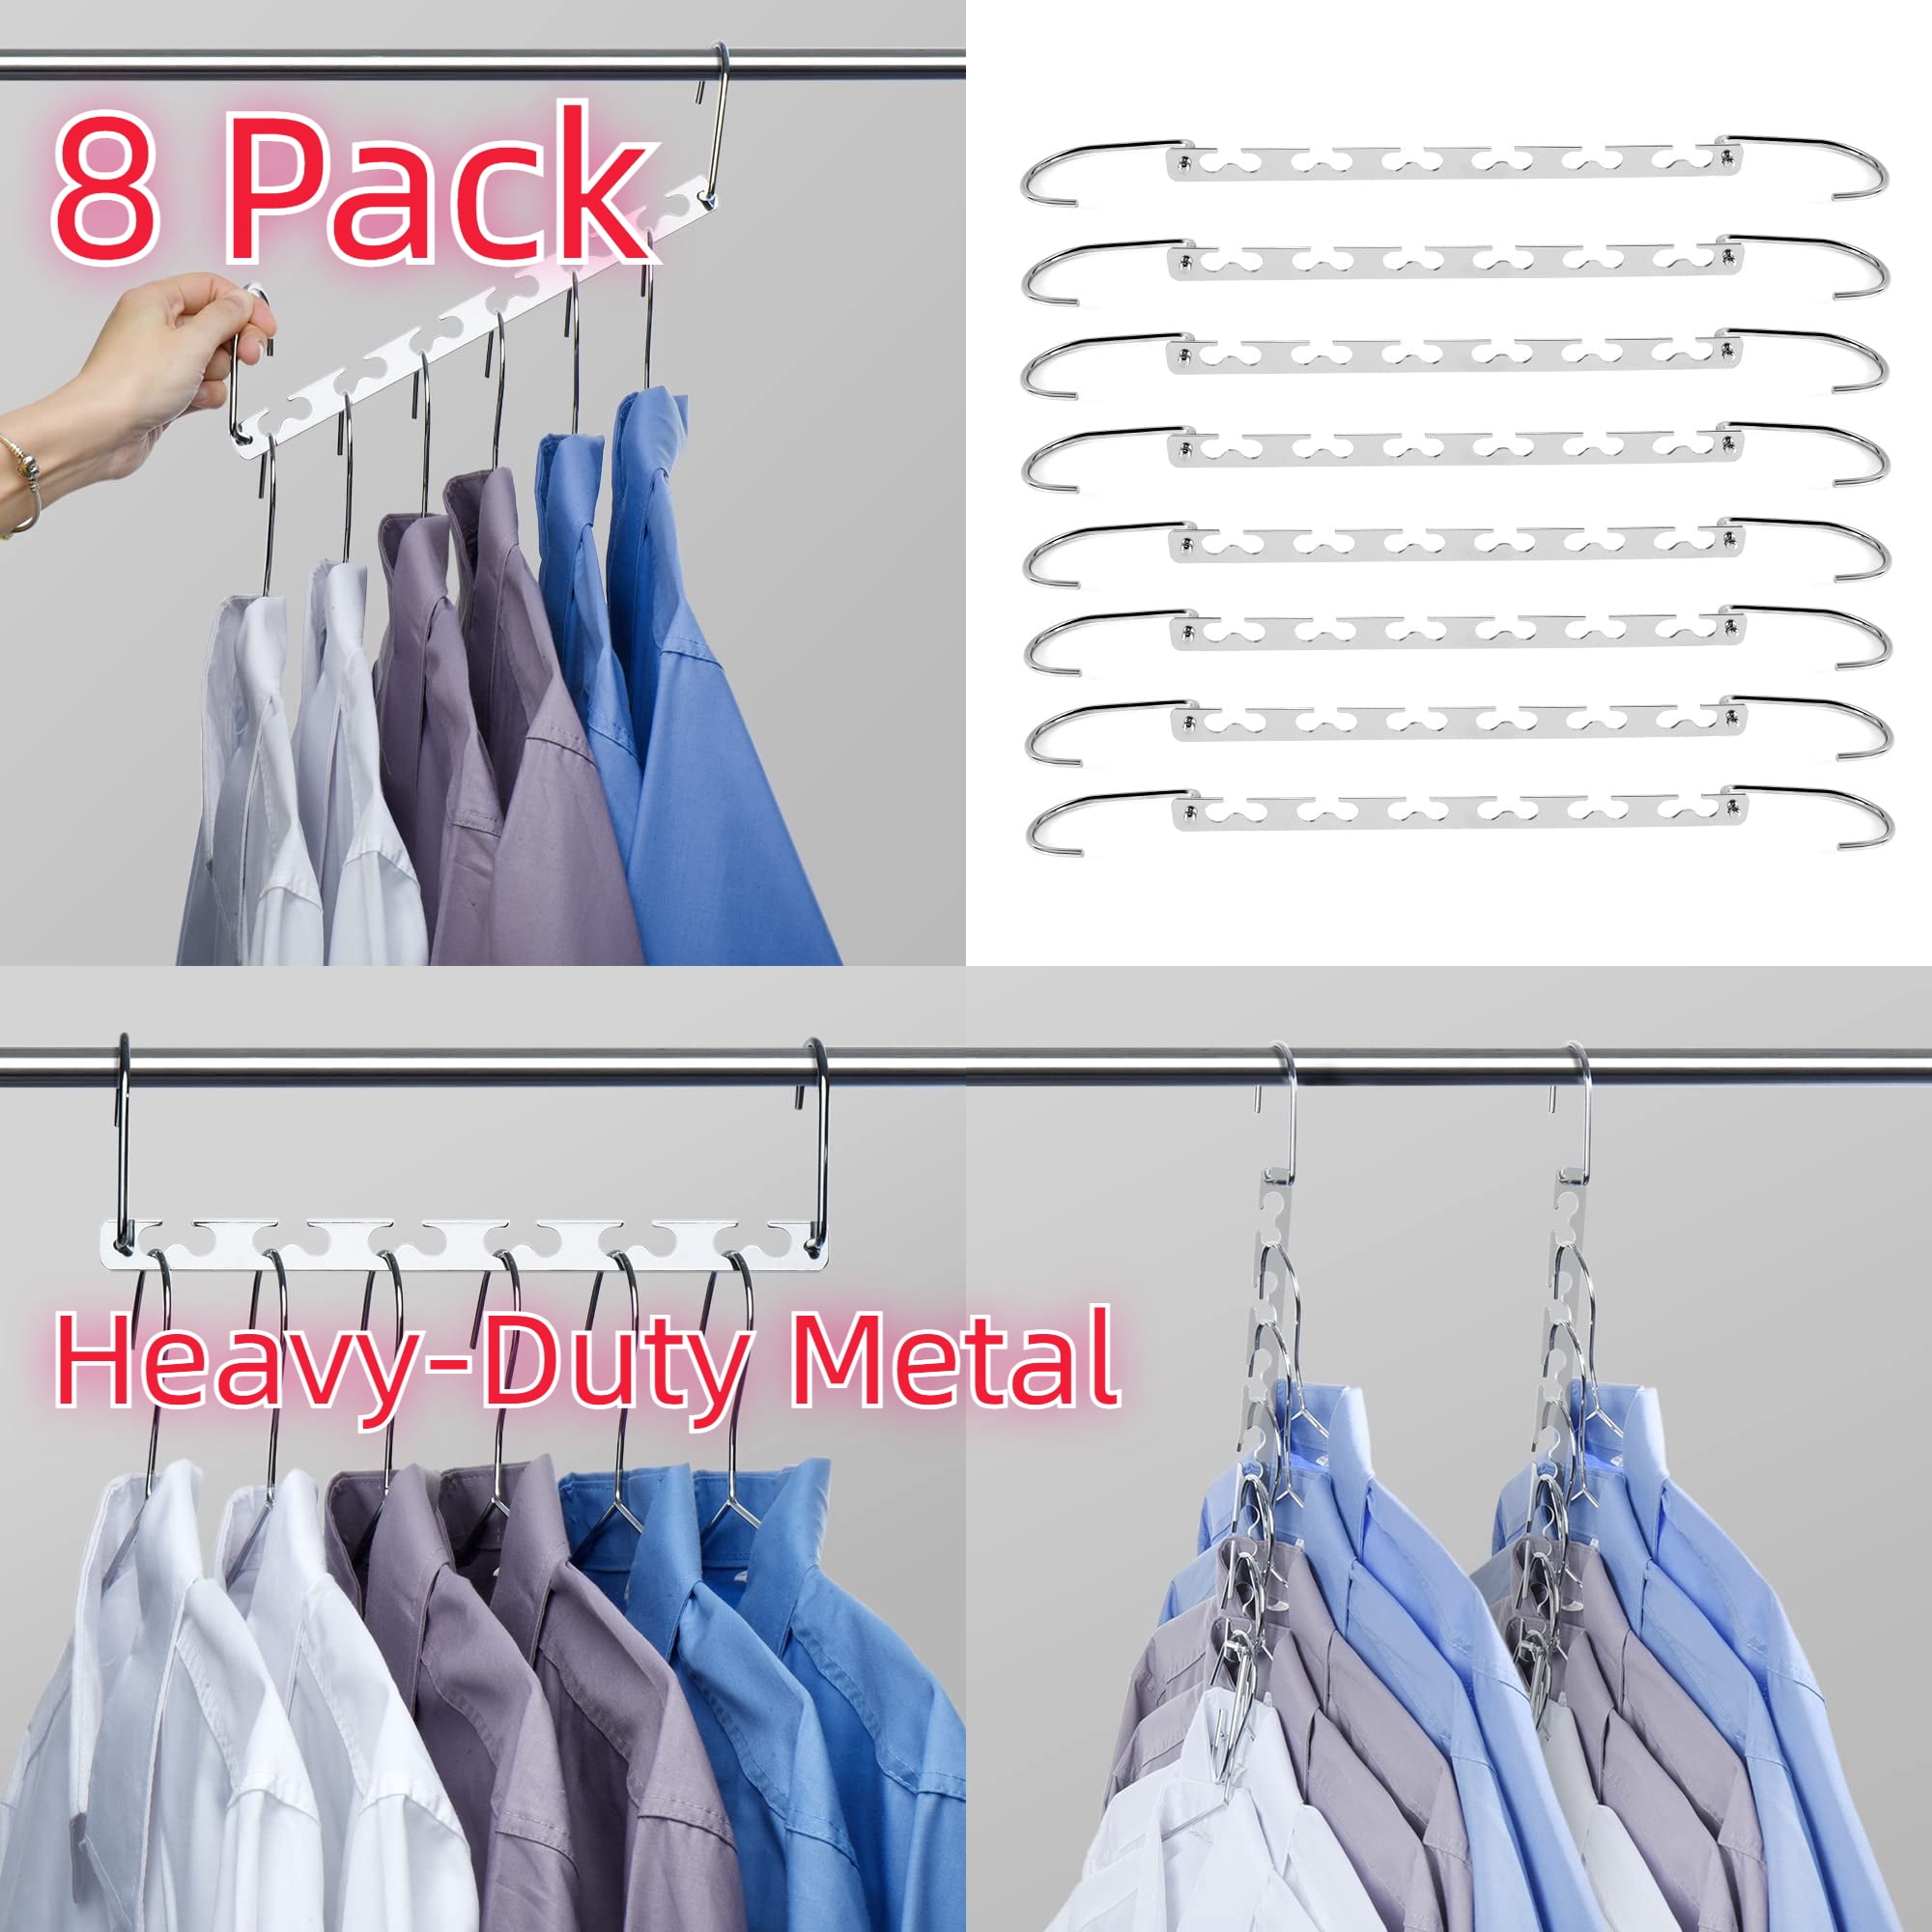 Metronic Metal Hanger Organizer, Heavy-Duty Hangers, Space Saving Hangers, 20 Pack, Stainless Steel